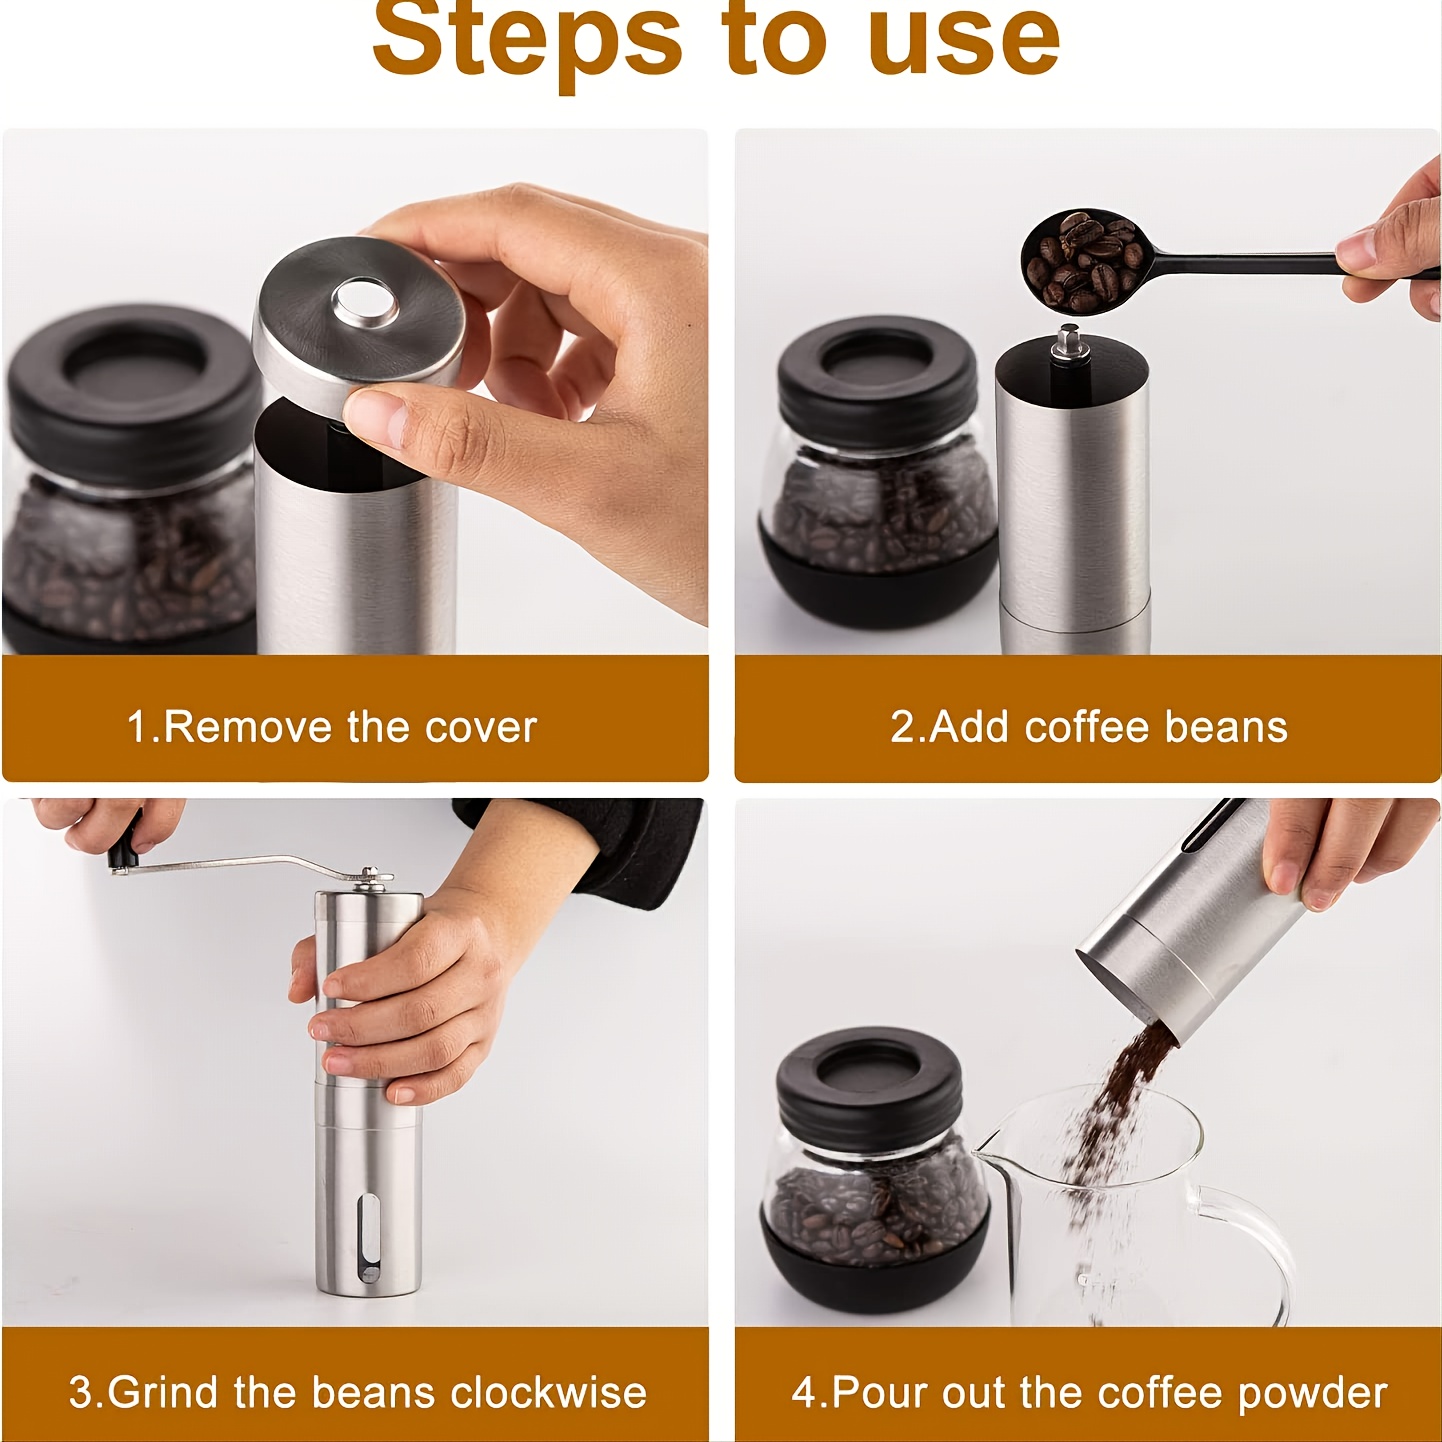 img.kwcdn.com/product/manual-coffee-grinder/d69d2f